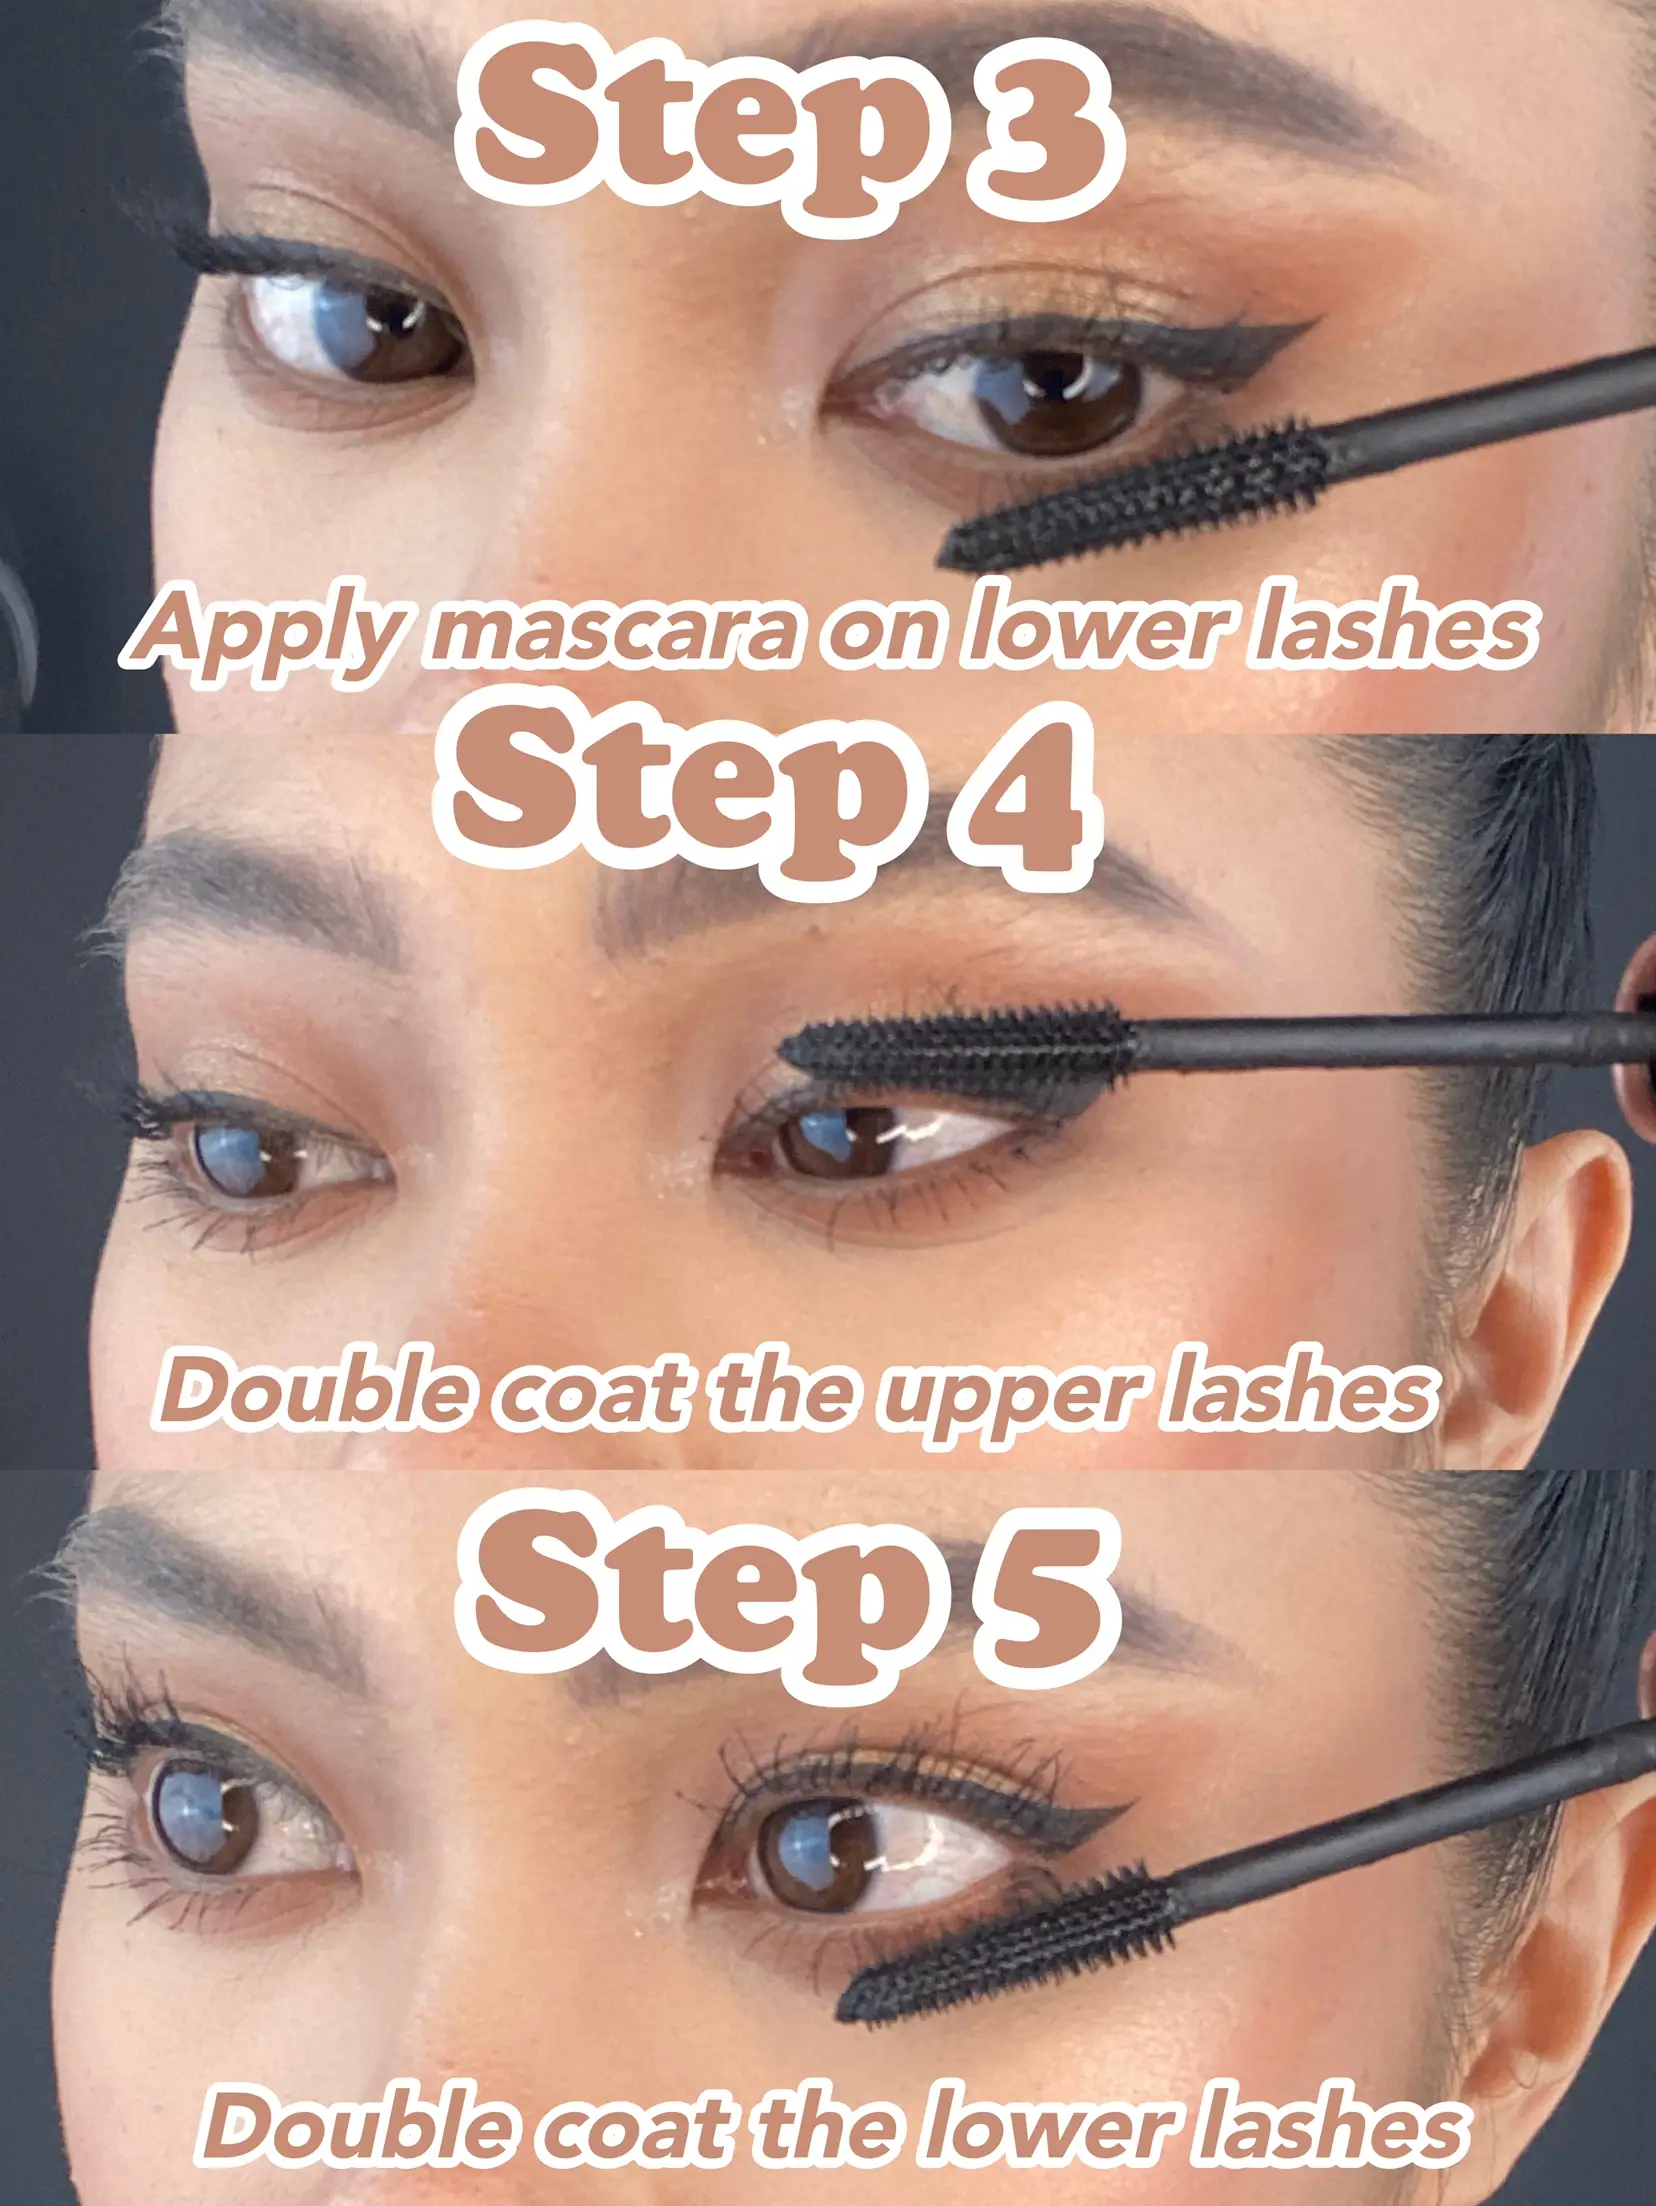 Mascara Application Tips